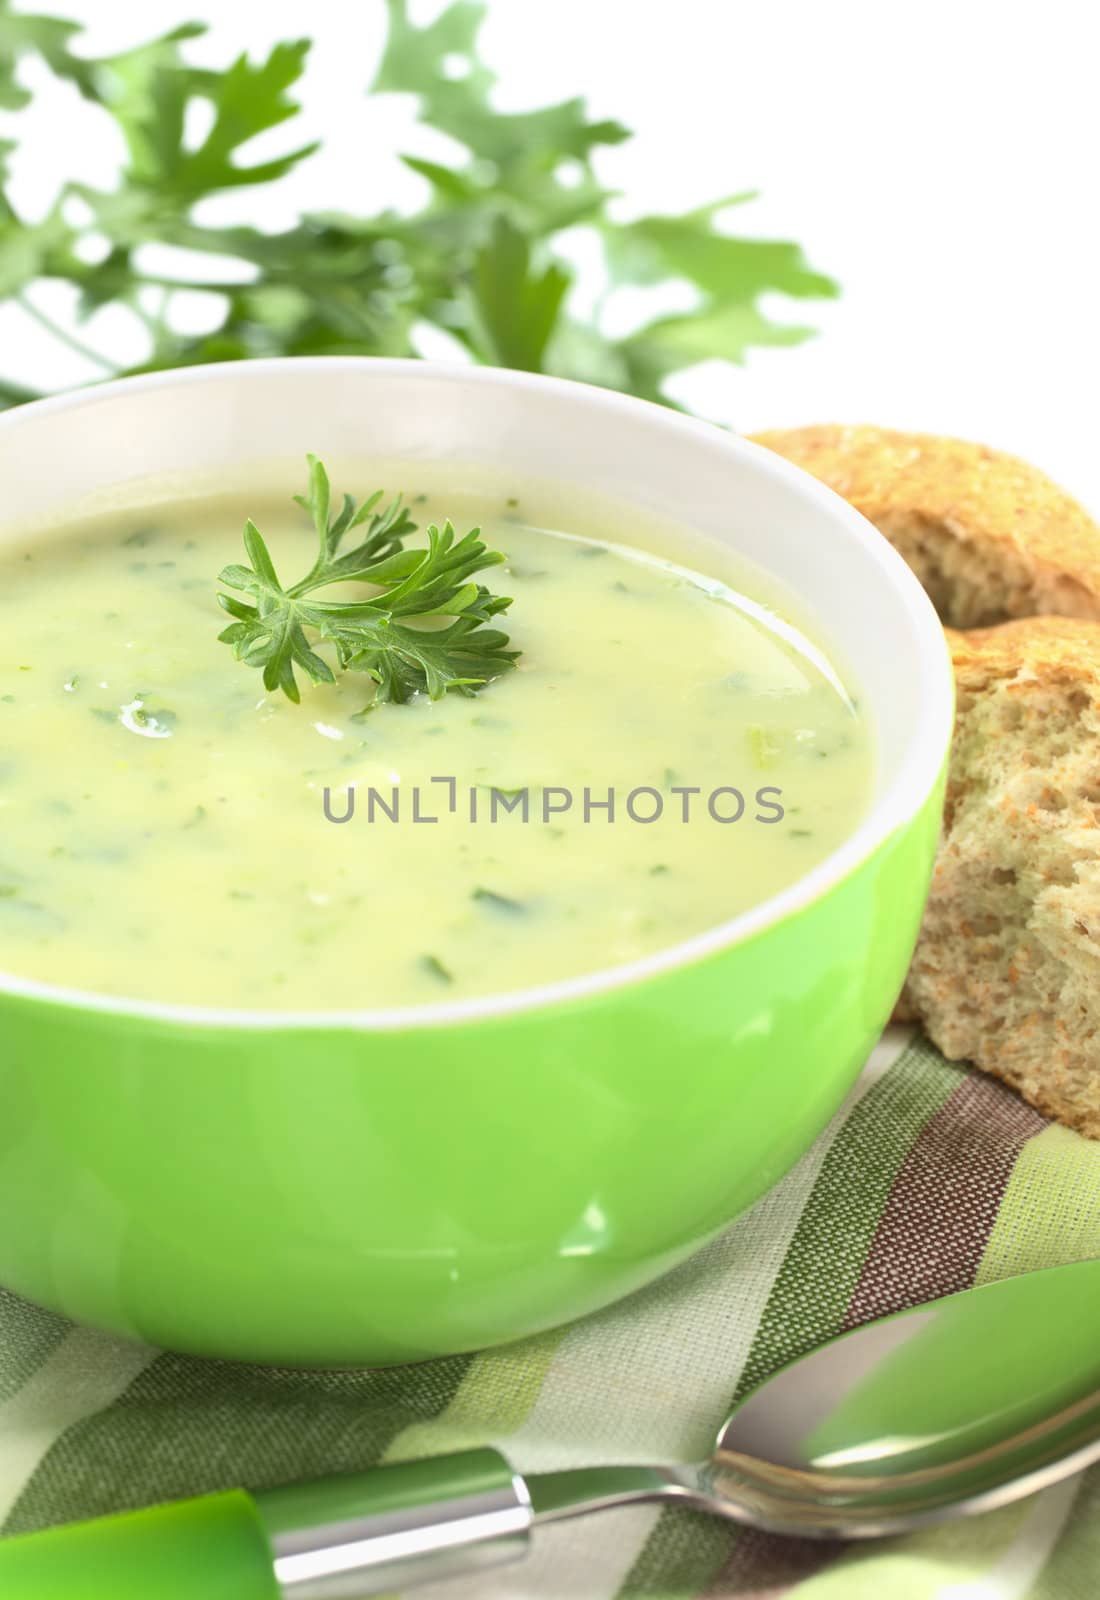 Potato Soup with Herbs by ildi